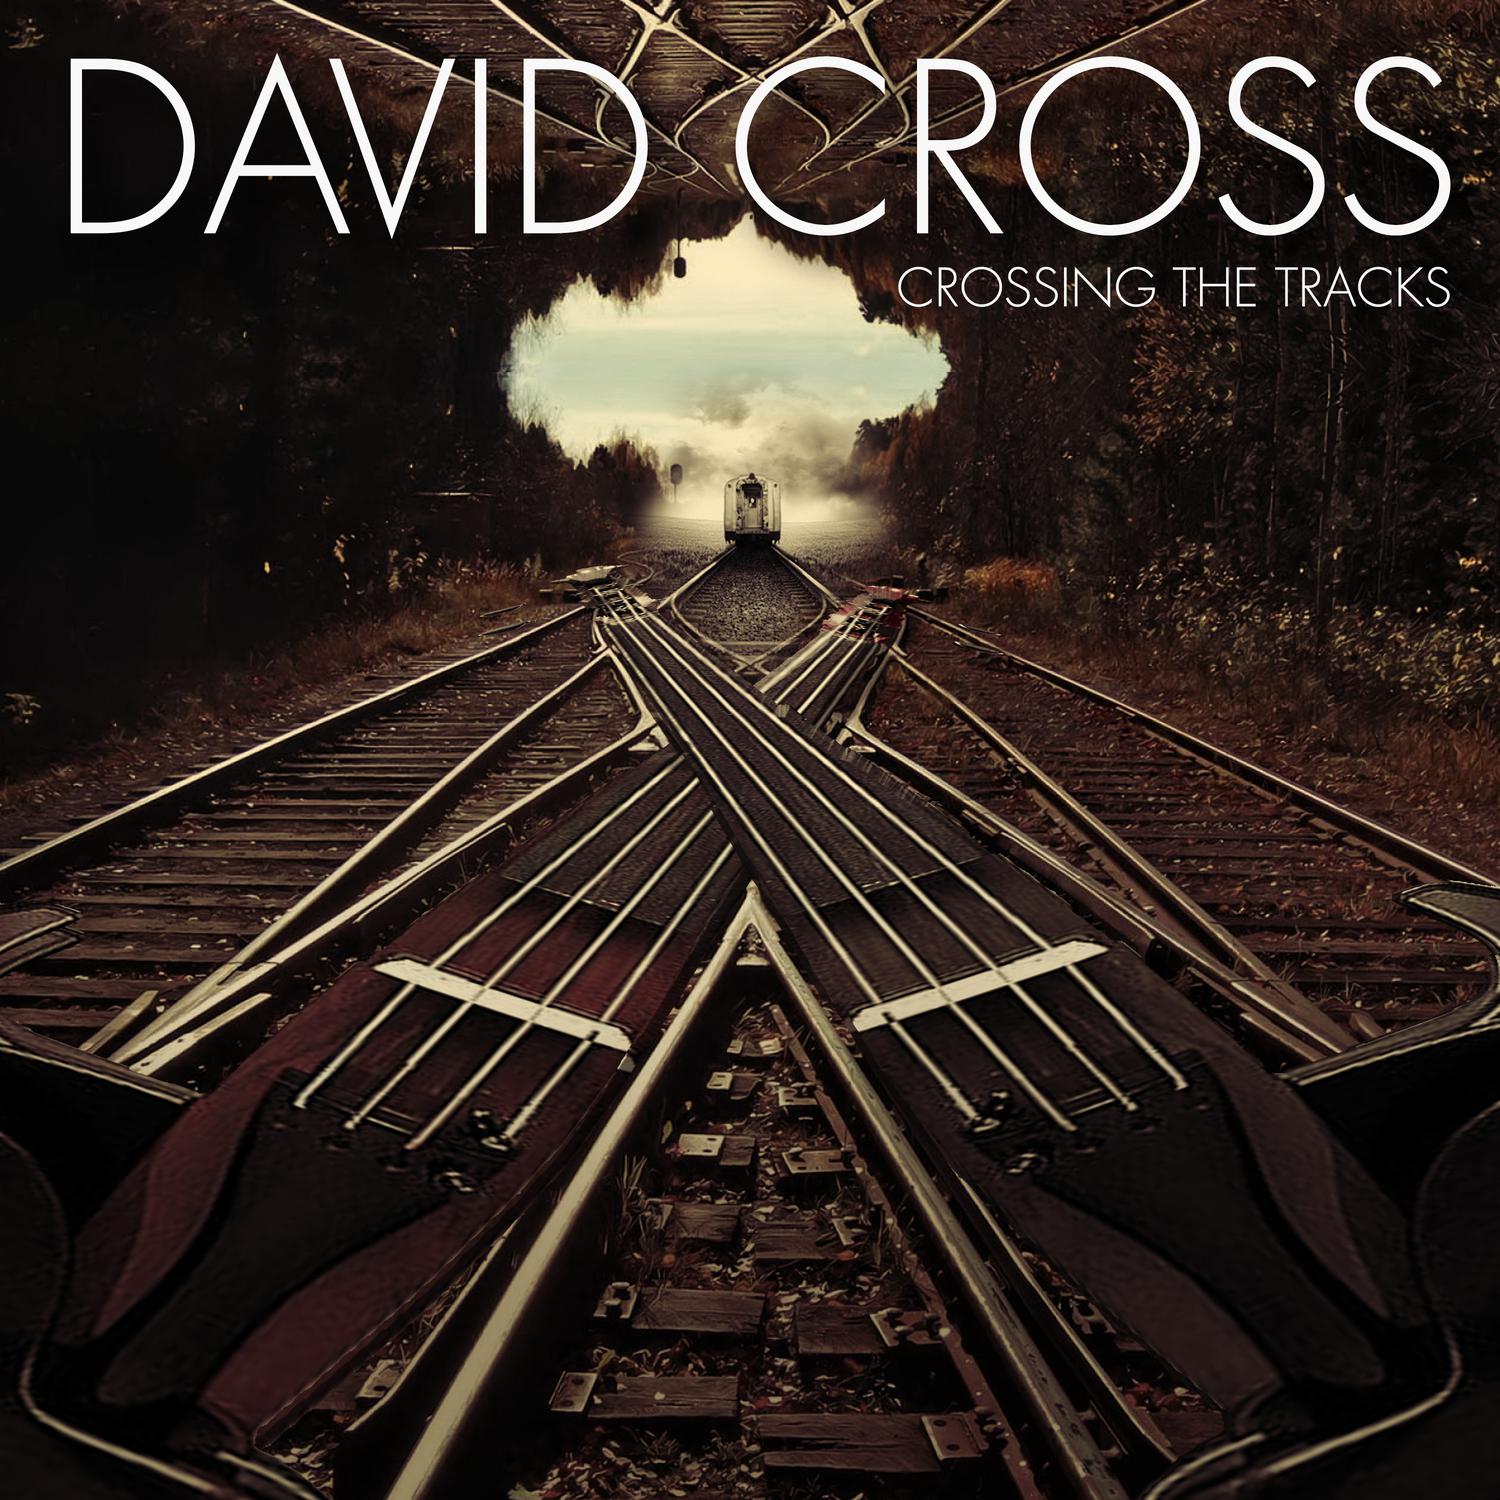 David Cross - The Light Inside Me (feat. Kimberly Freeman)